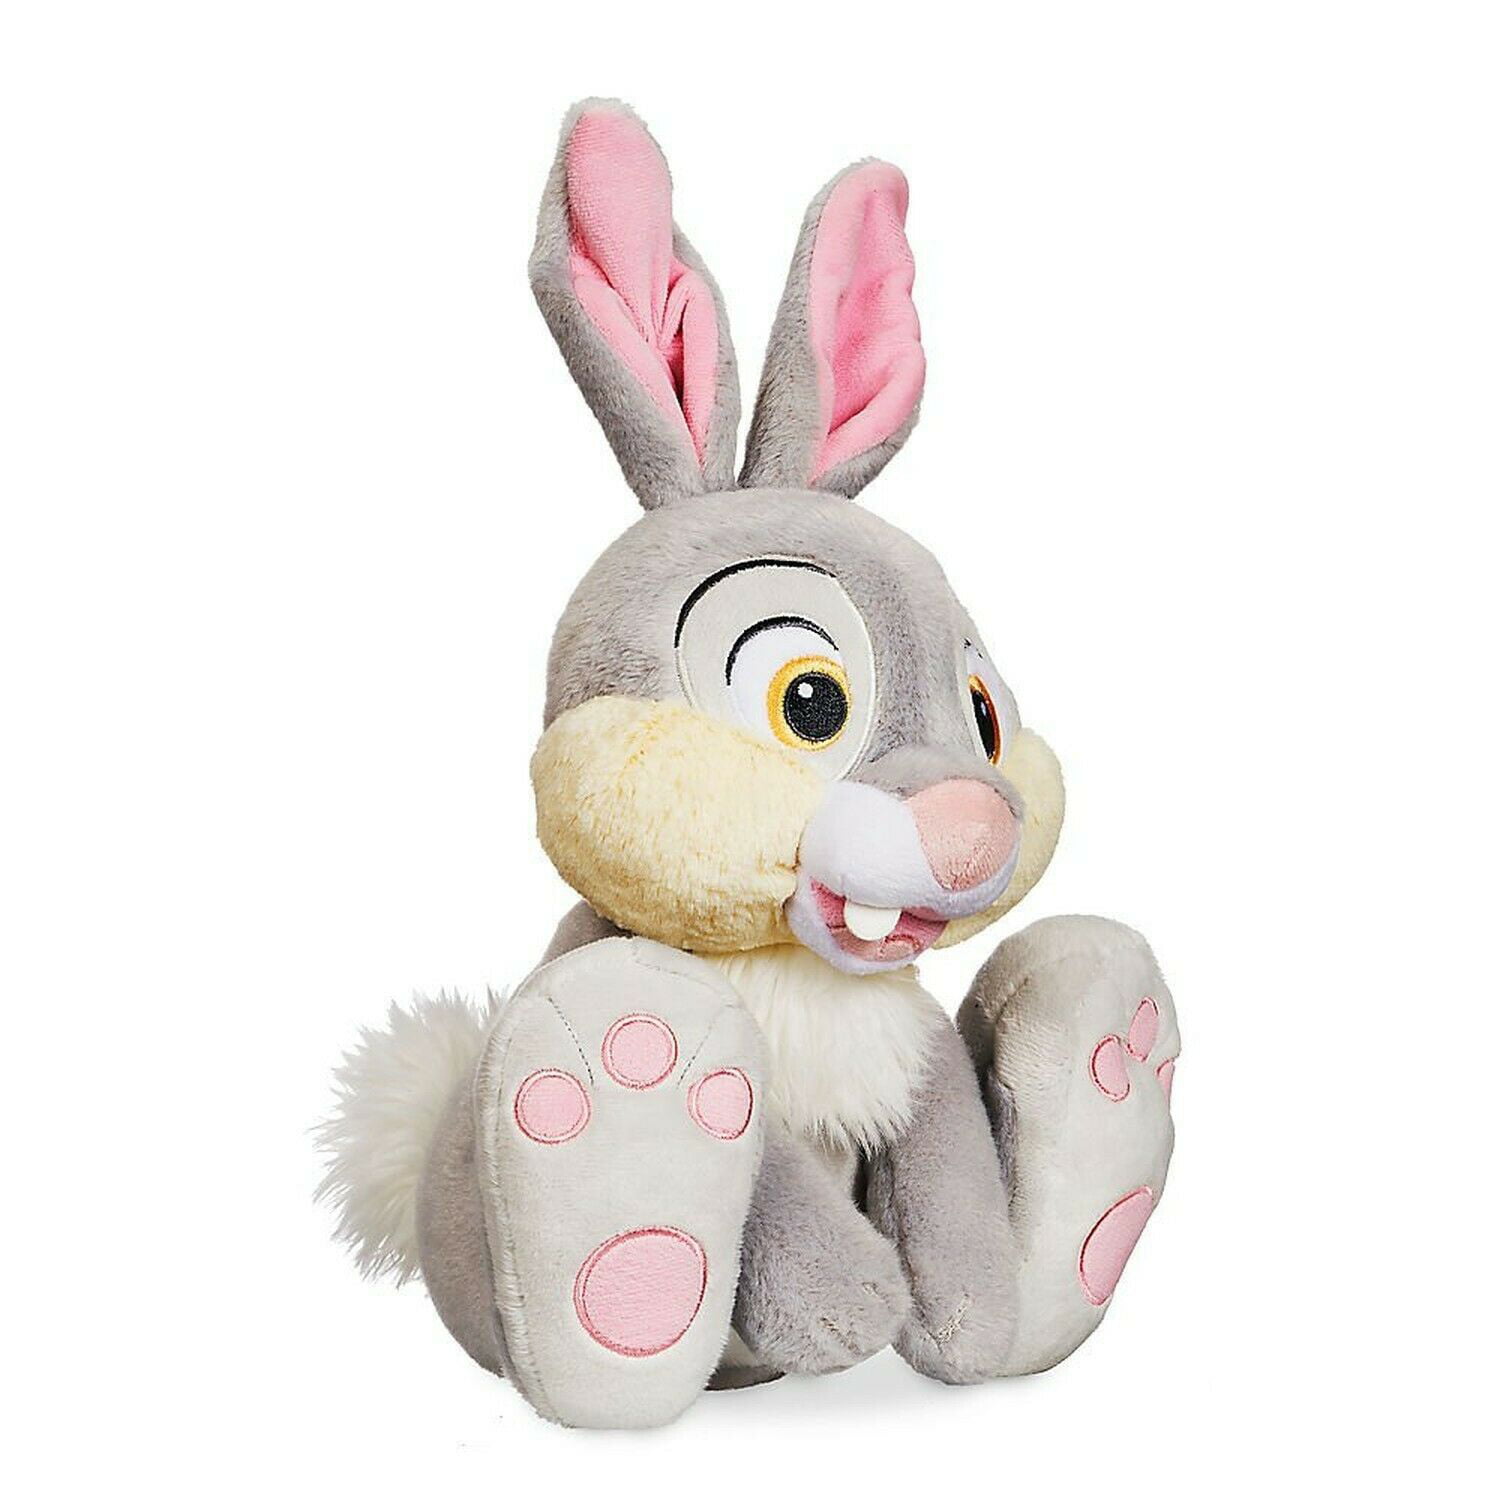 Thumper Bean Bag Plush Bambi 7in Disney Stuffed Animal Bunny Rabbit Gray for sale online